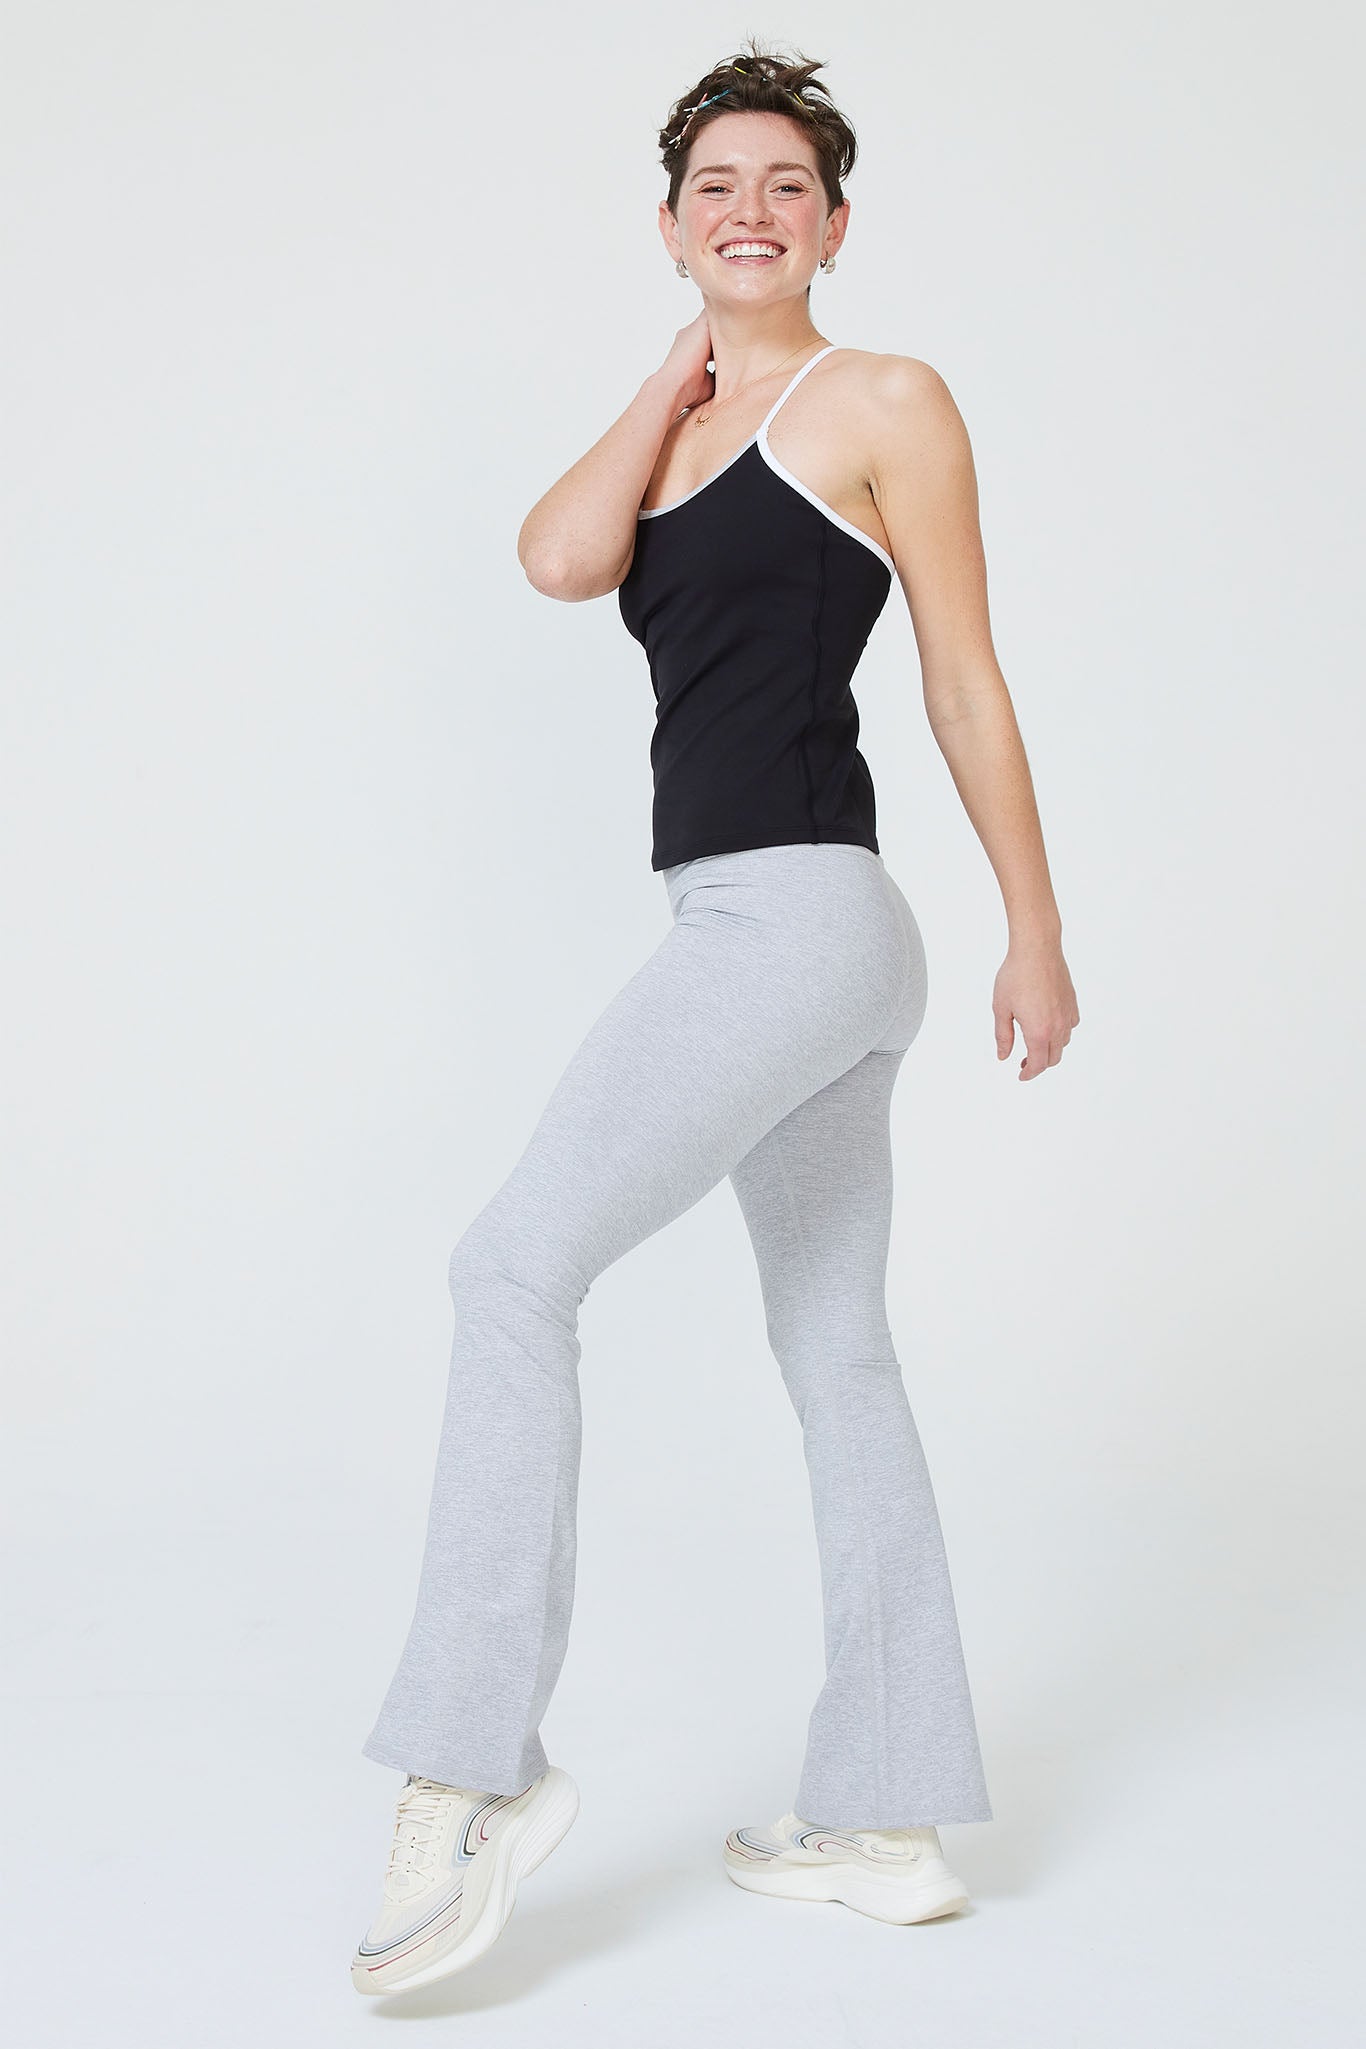 Love & Sports Women's Active Flare Pants, 30” Inseam, Sizes XS-XXXL